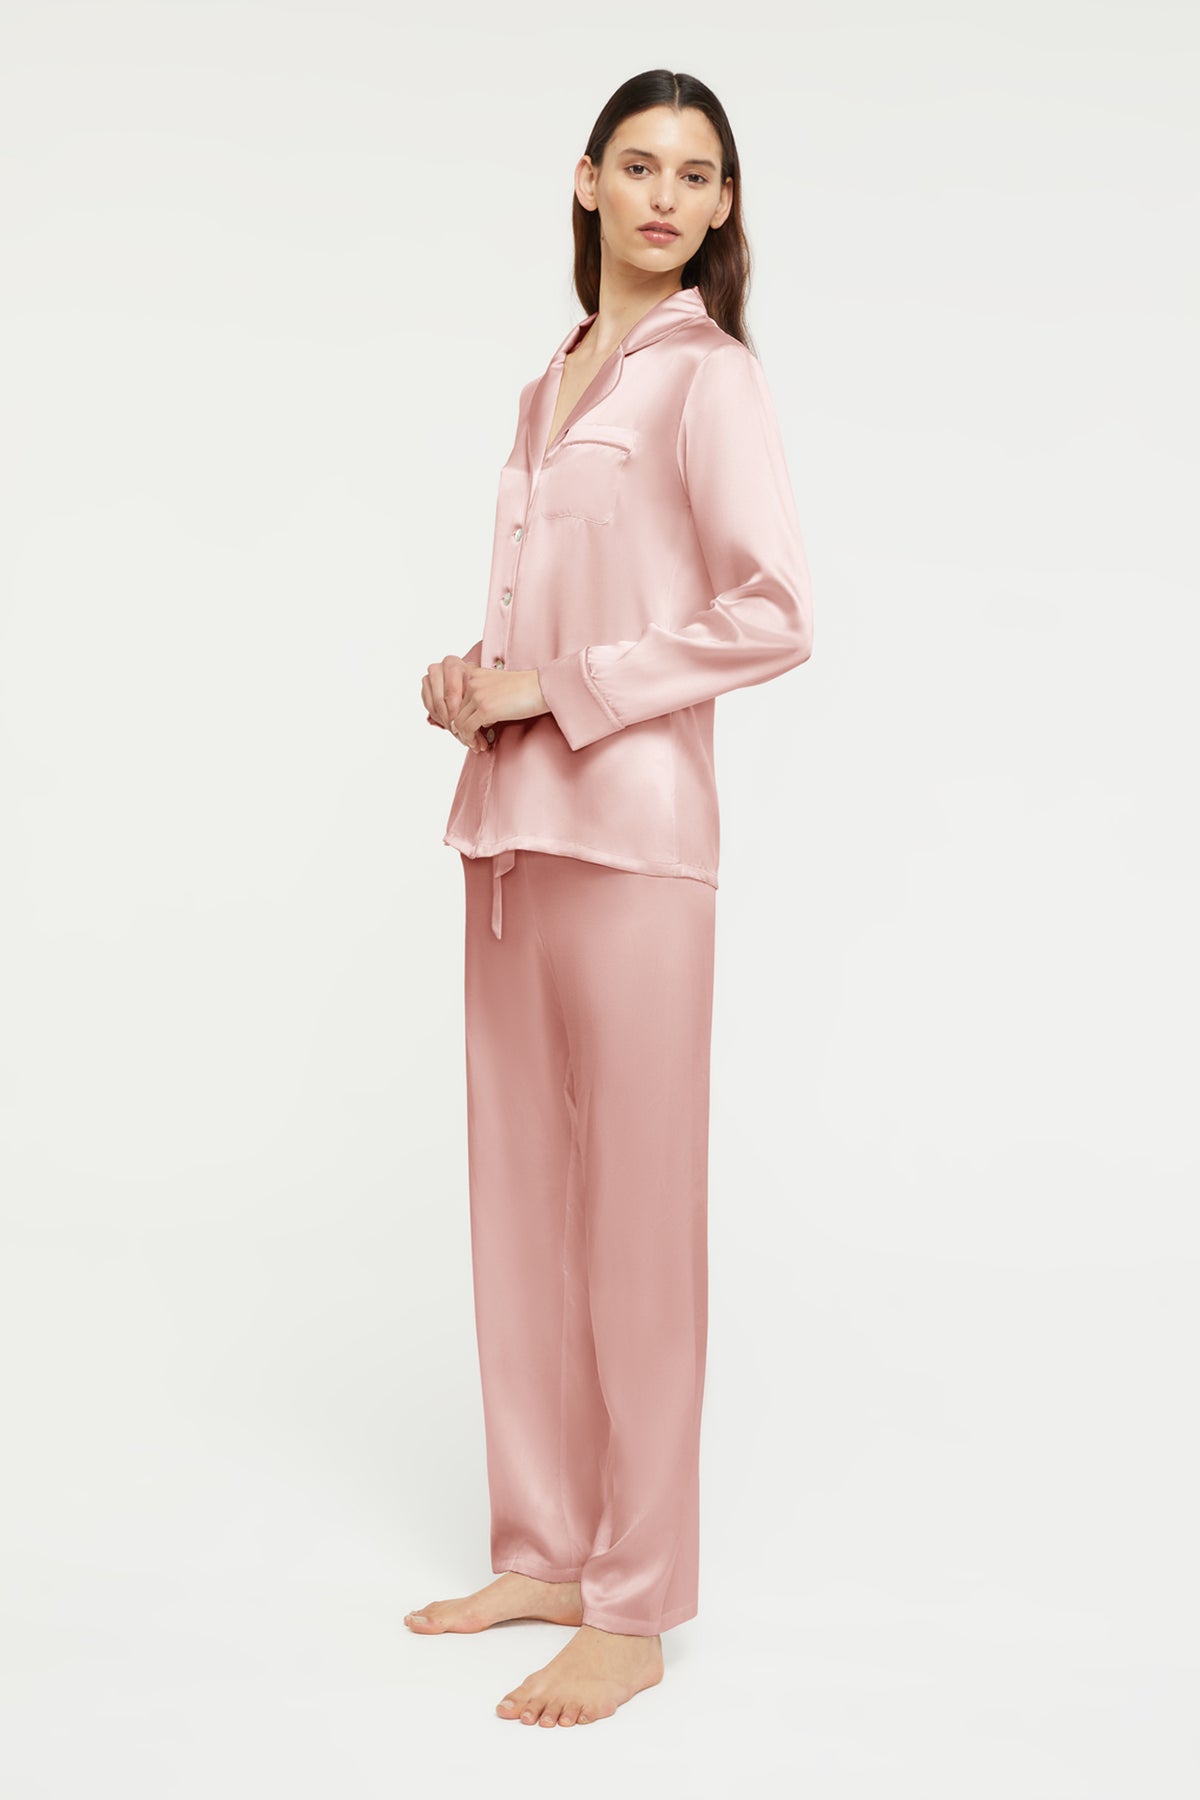 GINIA Fine Finishes pajama in Bridal Rose - 100% 19mm Silk Grade 6A